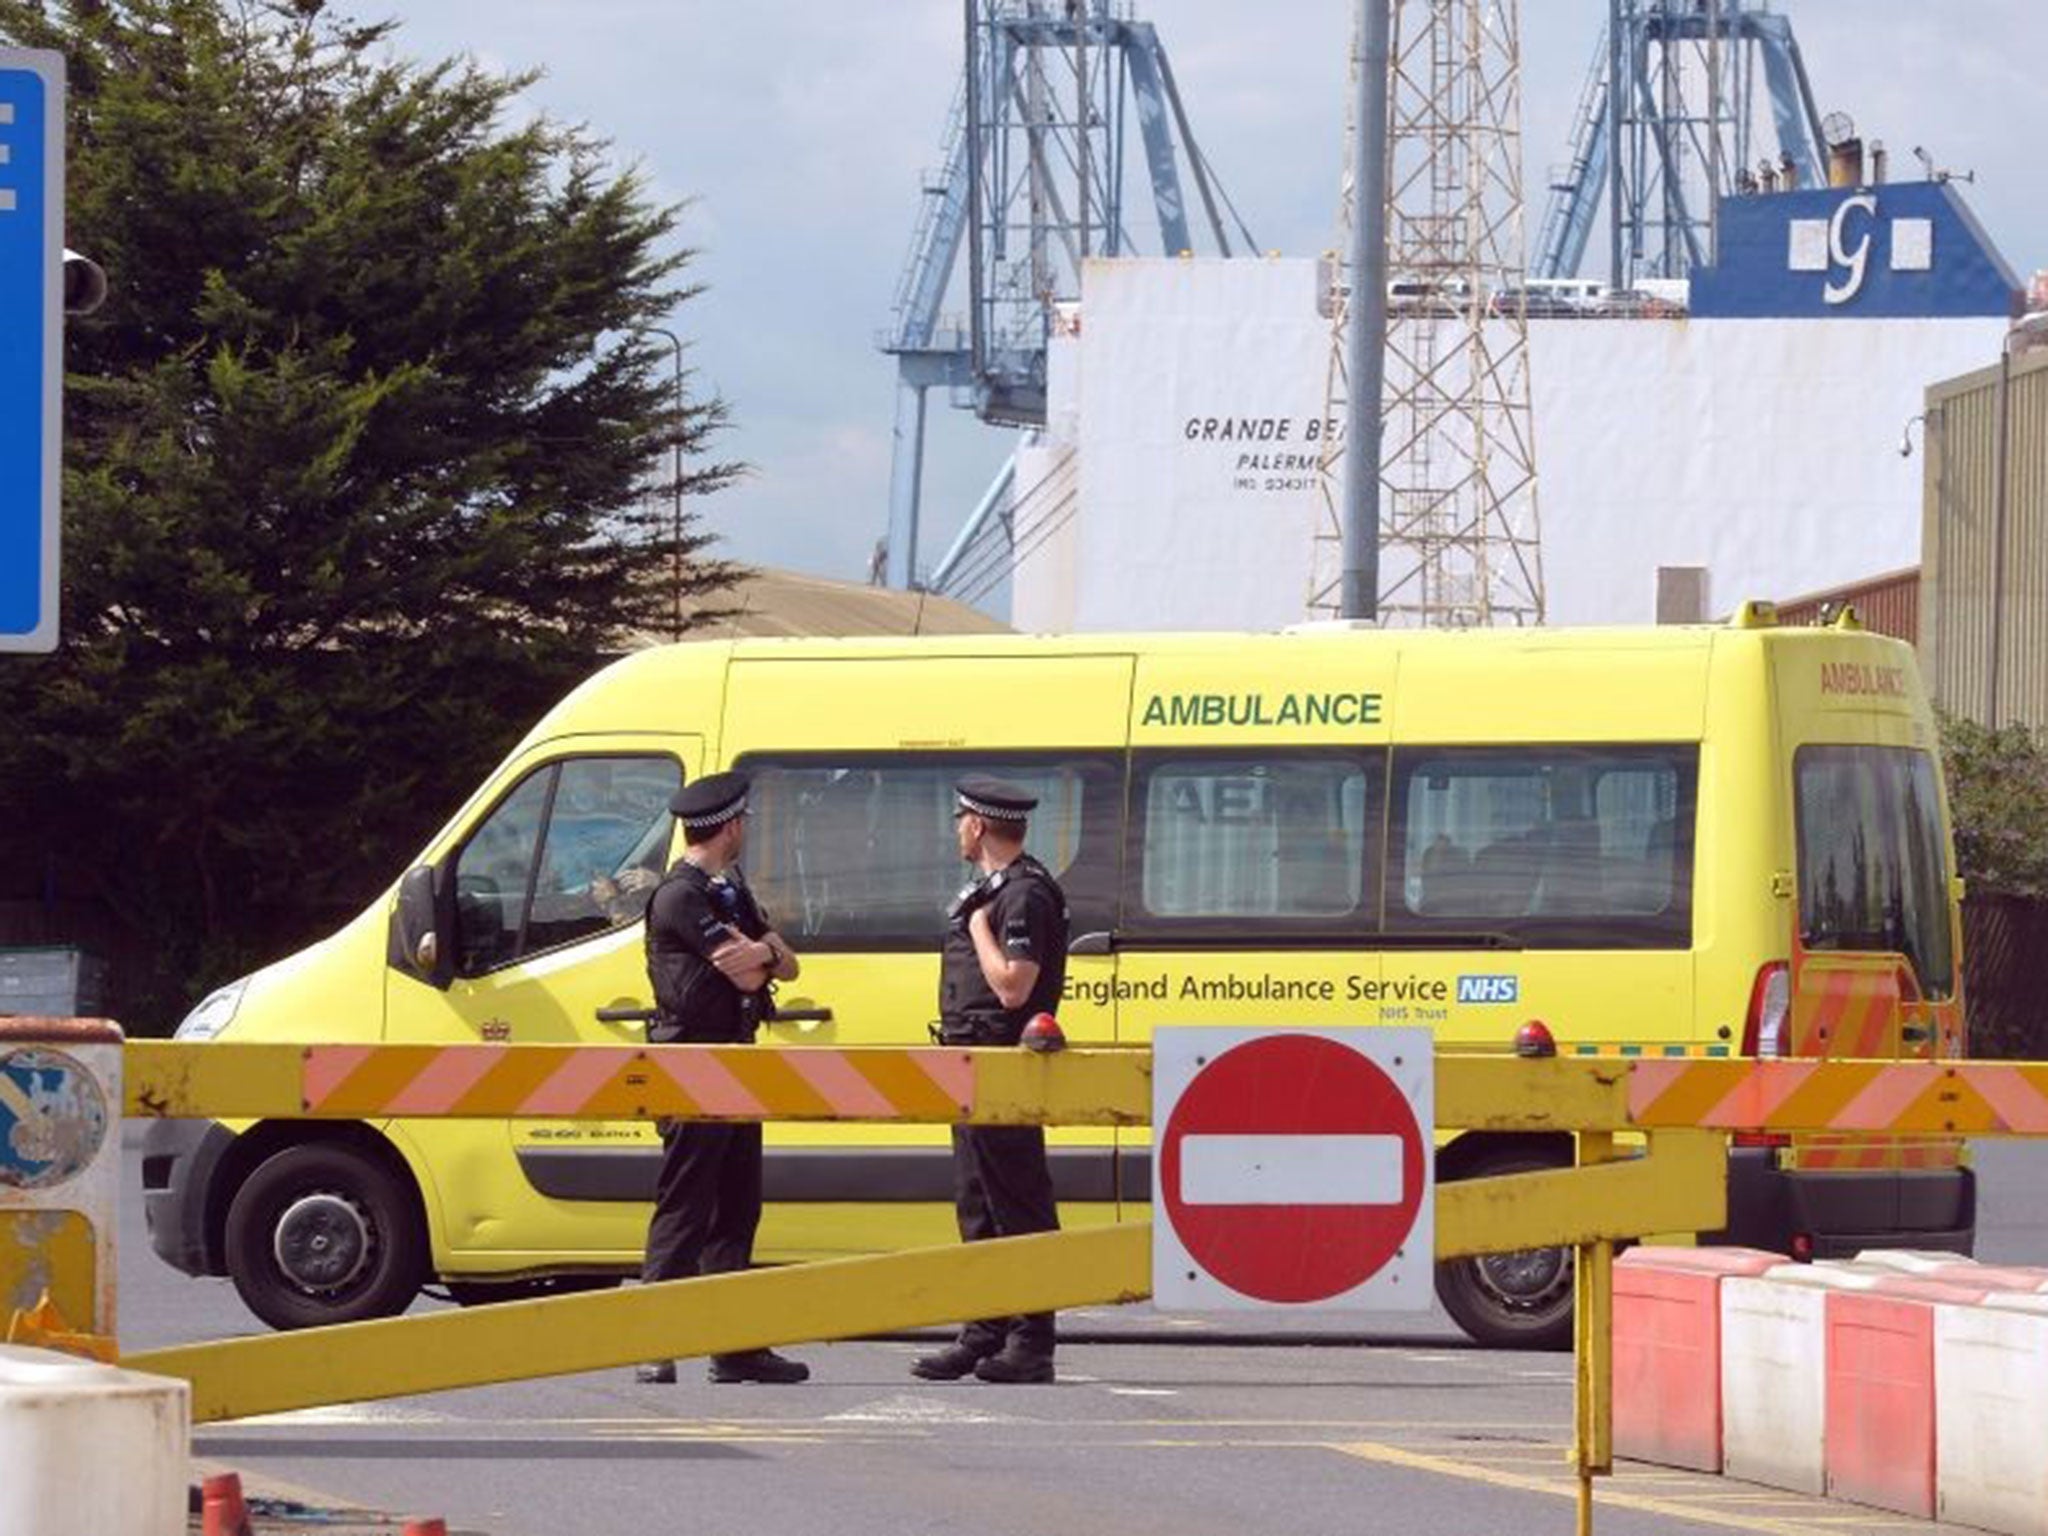 An ambulance van drives into Tilbury Docks in Essex